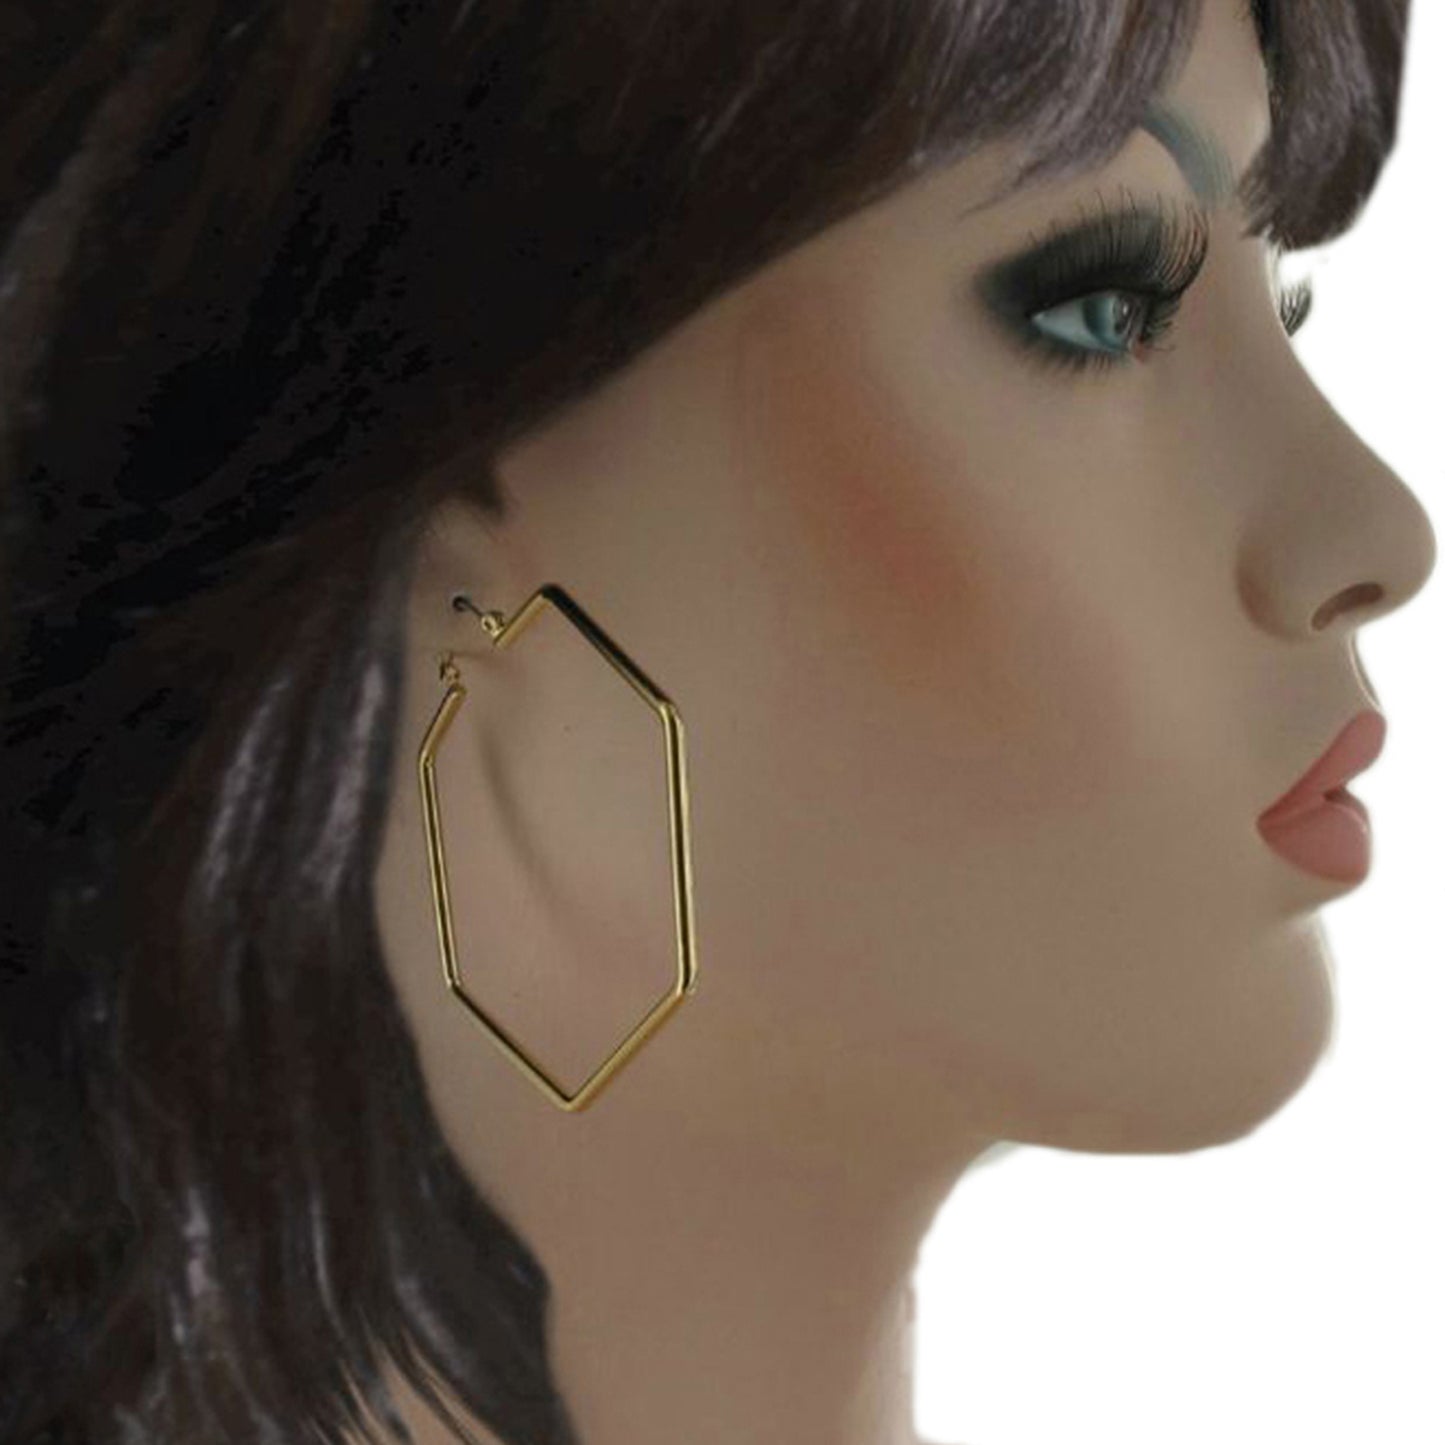 Ky & Co Gold Tone Big Hoop Earrings Hexagon Geometric 2 1/4" USA Made